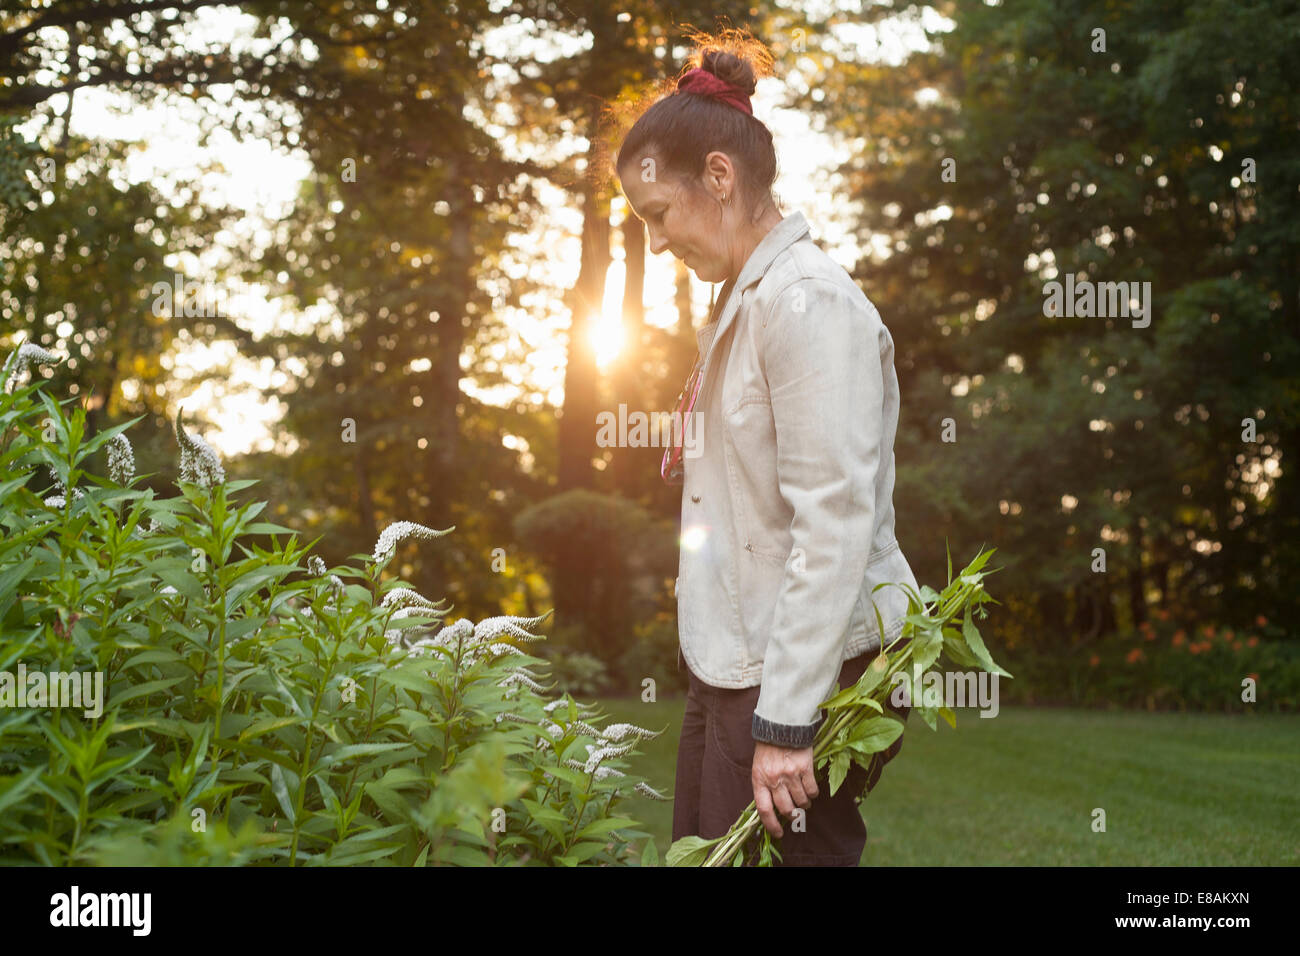 Mature woman tending garden plants Stock Photo